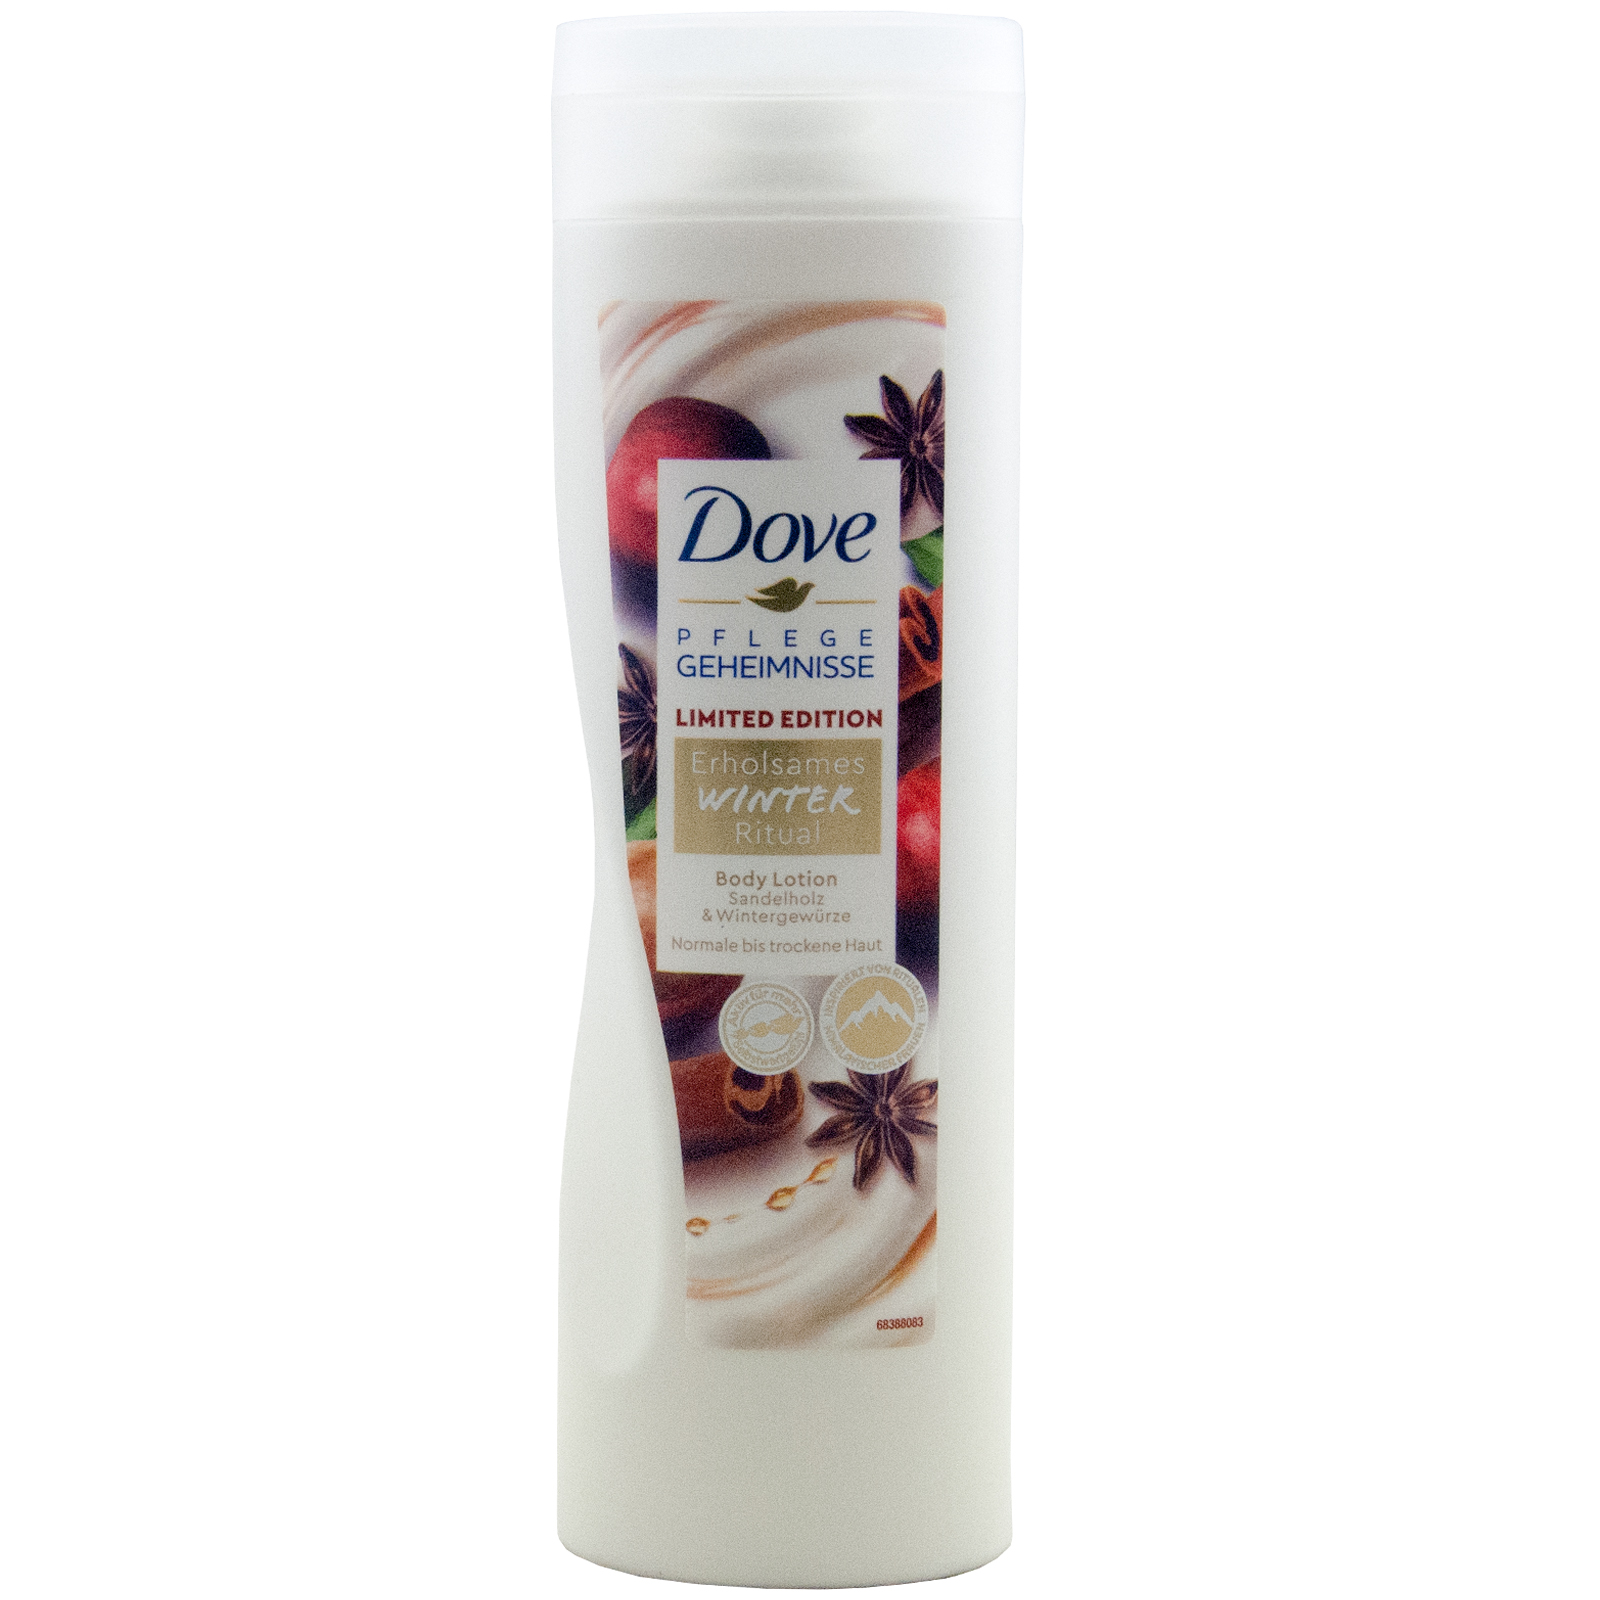 Dove Body Lotion Erholsames Winter Ritual 1 X 8.5oz Limited Edition